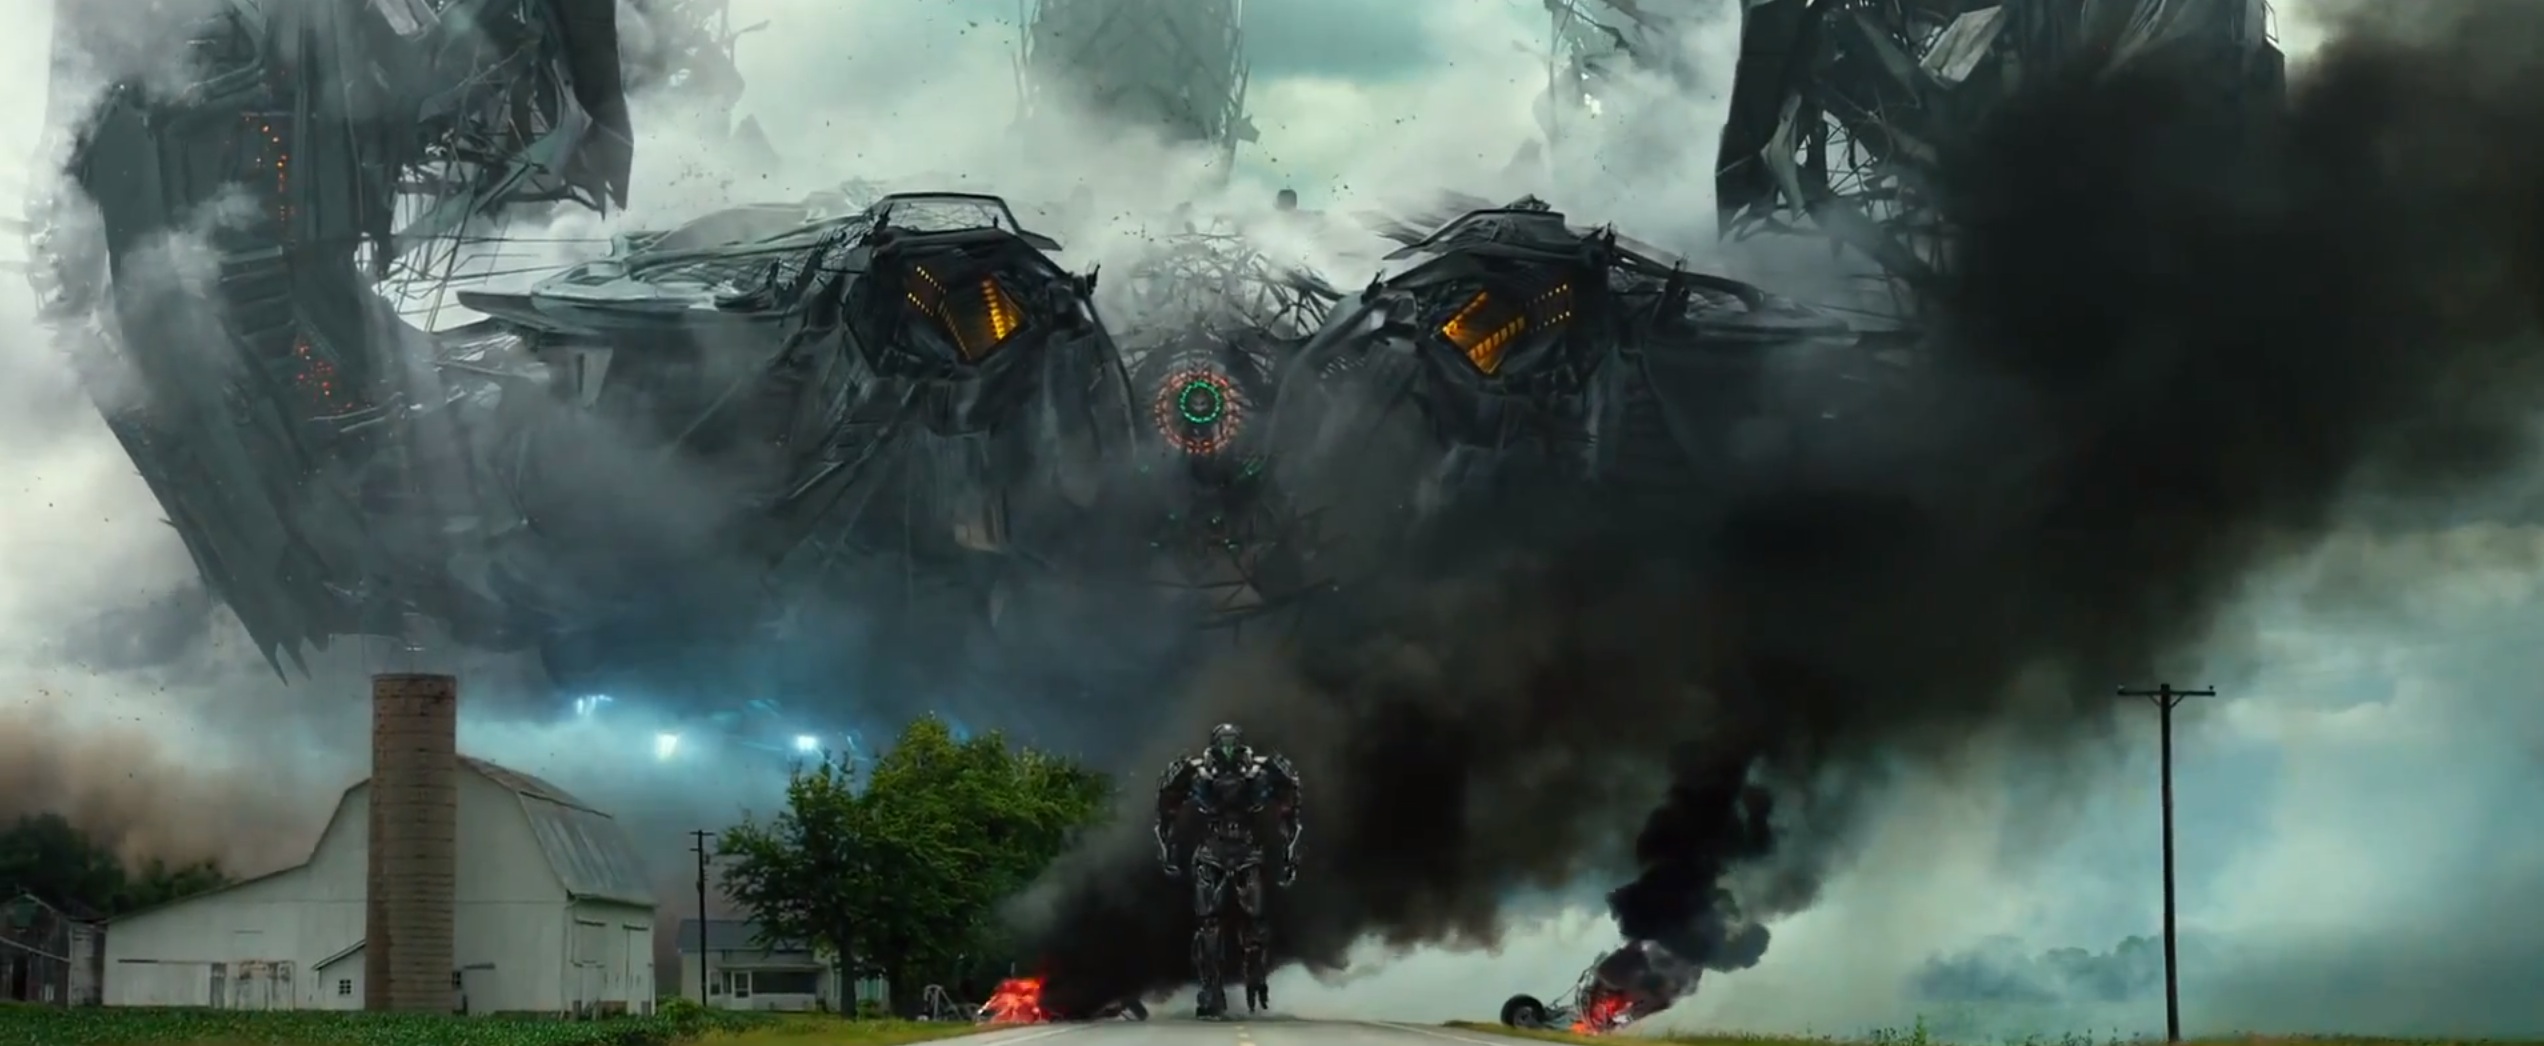 Transformers 4 bande annonce officielle